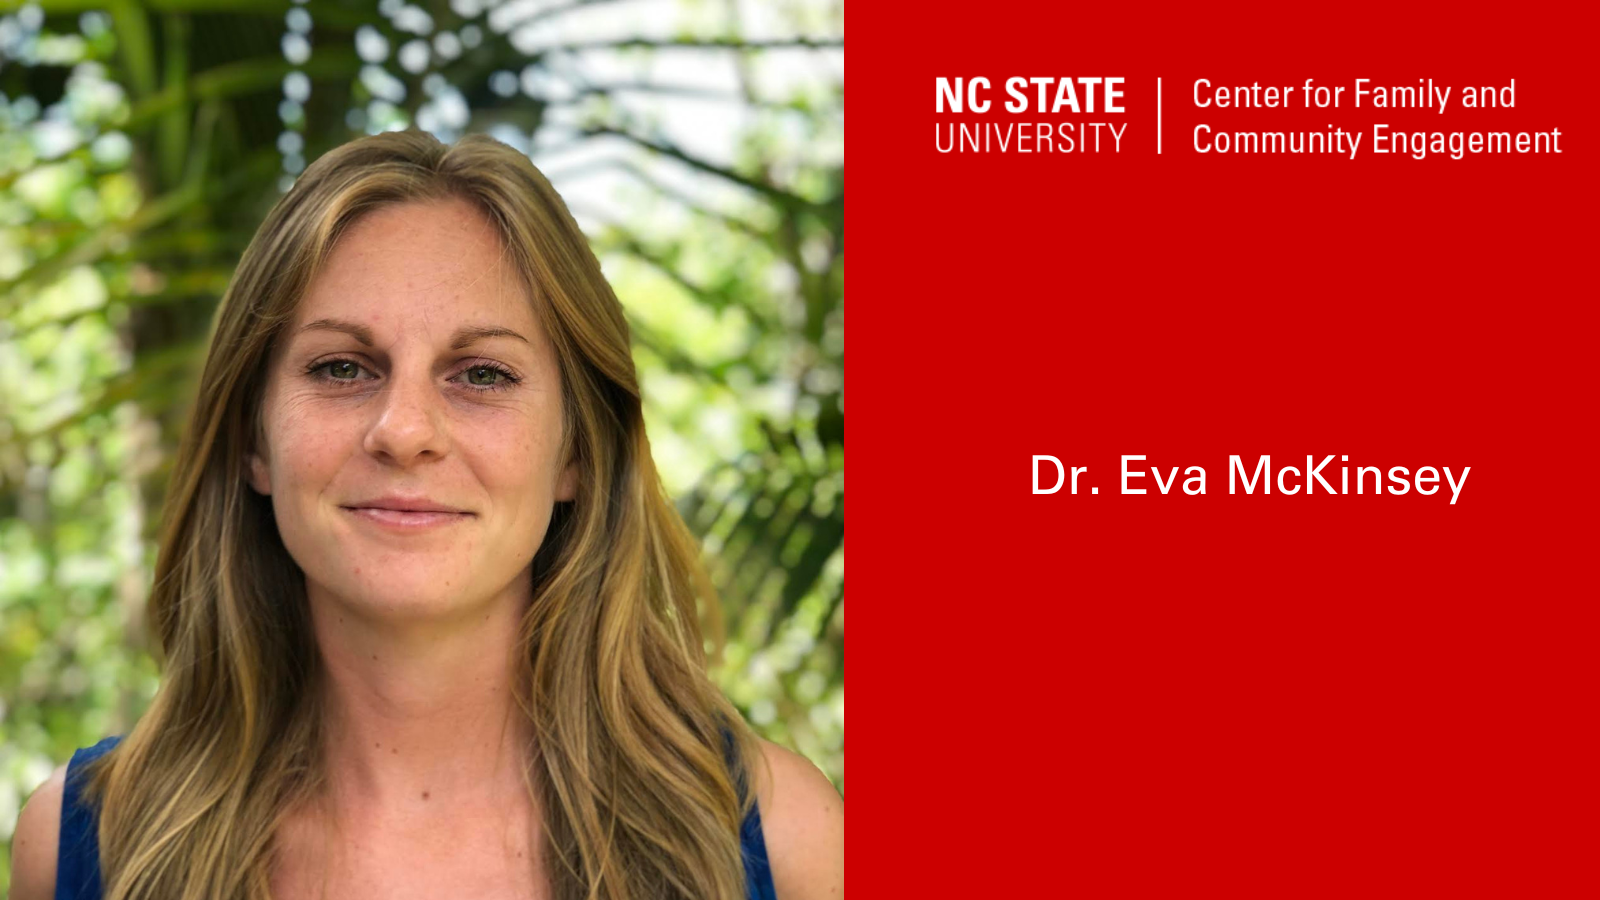 Congratulations, Dr. Eva McKinsey!